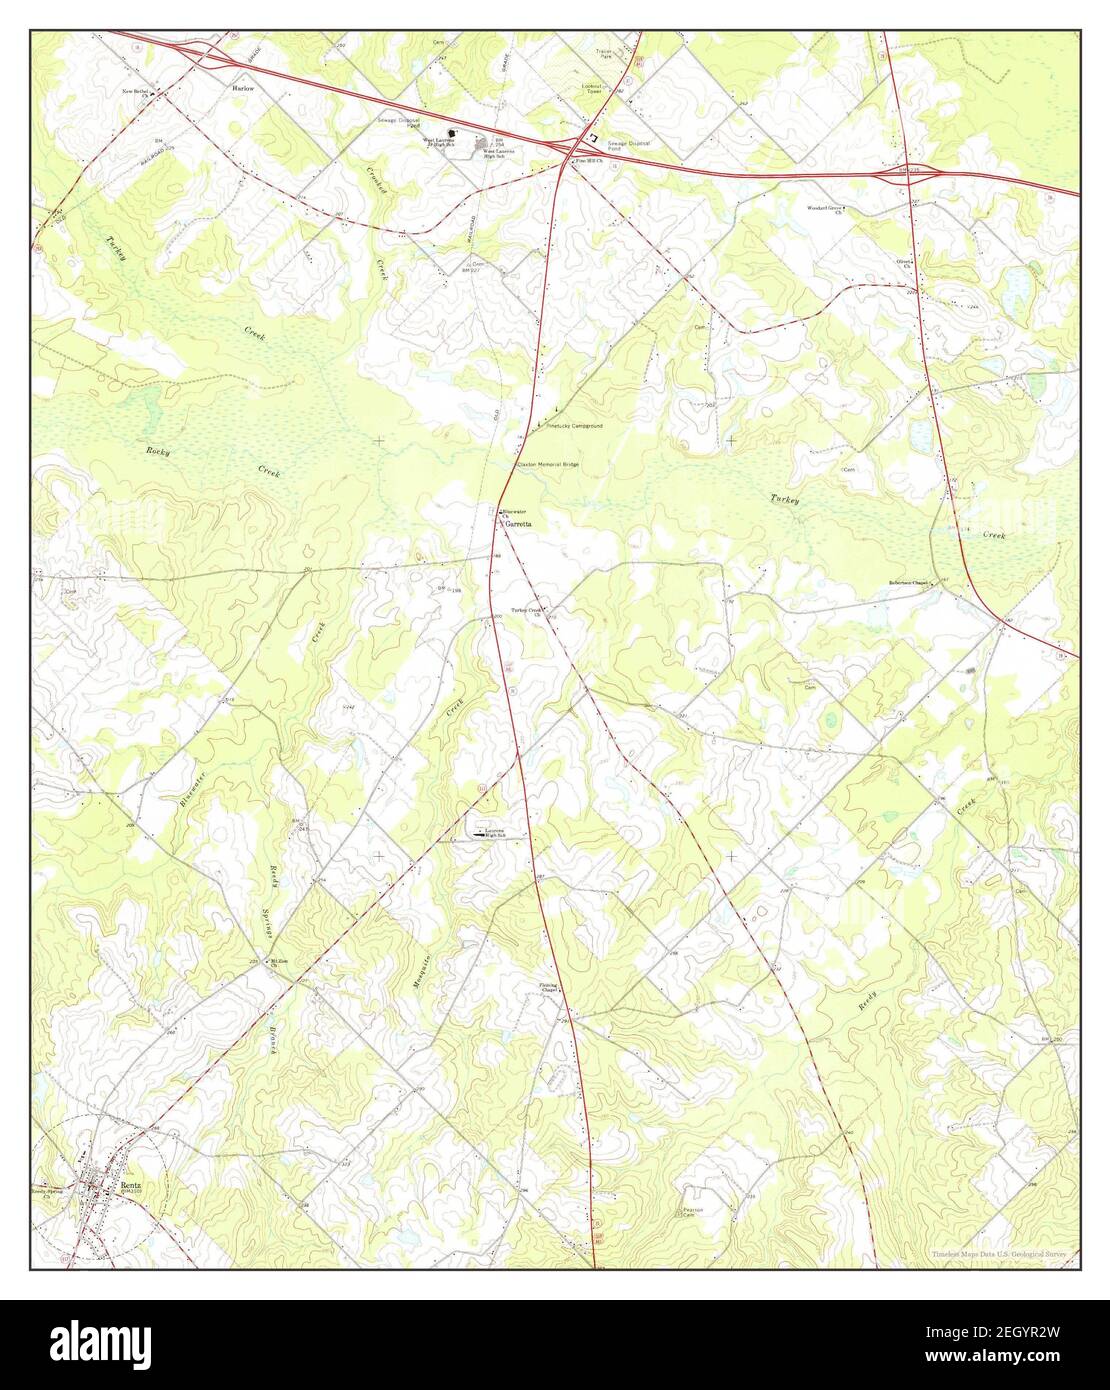 Rentz, Georgia, map 1974, 1:24000, United States of America by Timeless Maps, data U.S. Geological Survey Stock Photo